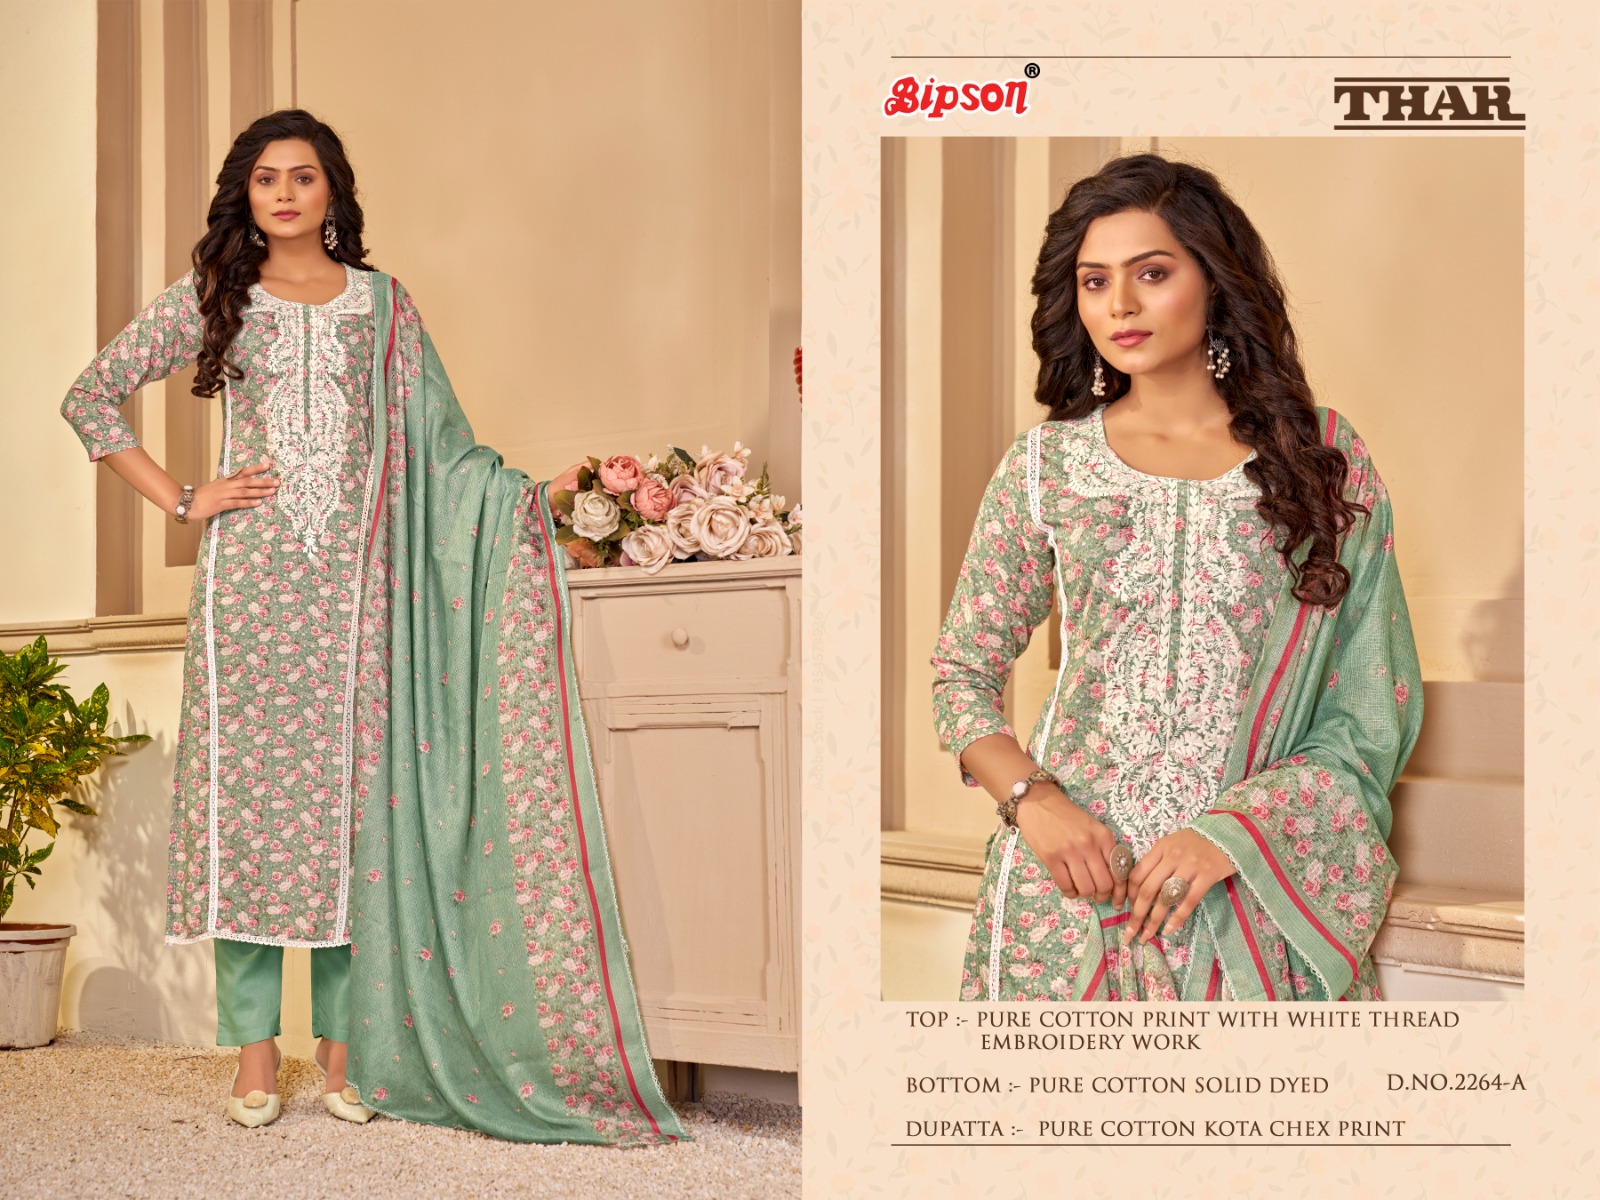 Bipson thar 2264 cottone exclusive print salwar suit catalog